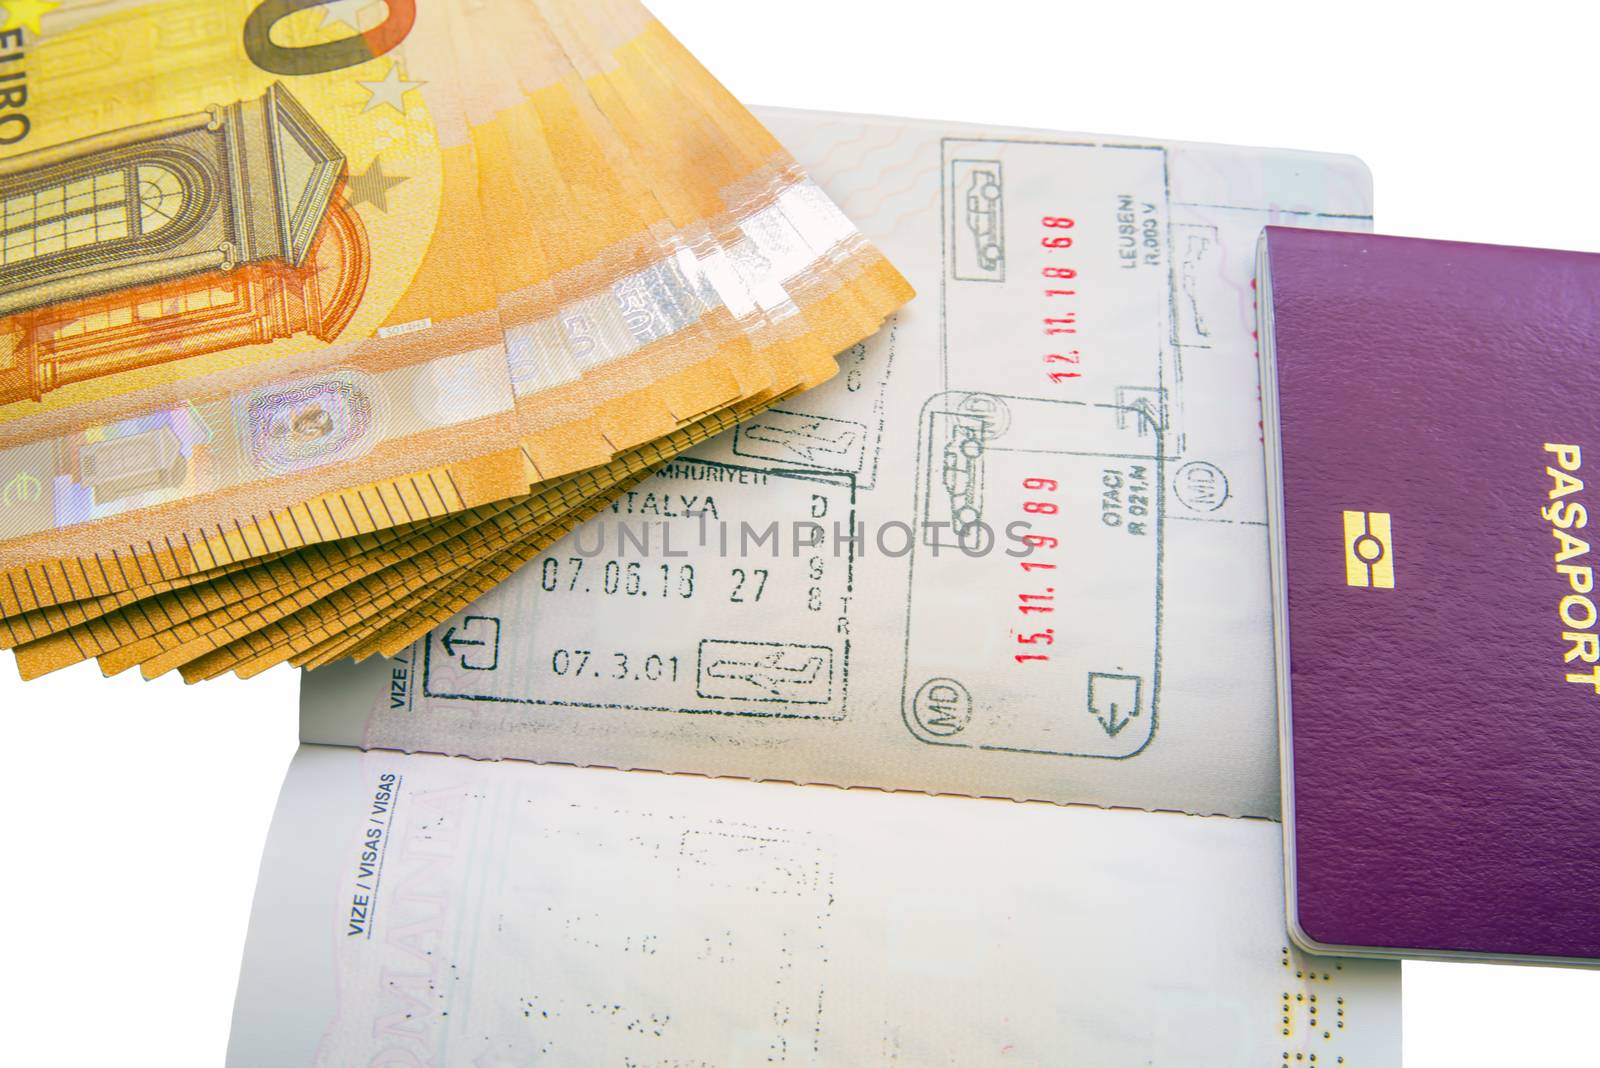 Euro banknotes and passport visa by savcoco